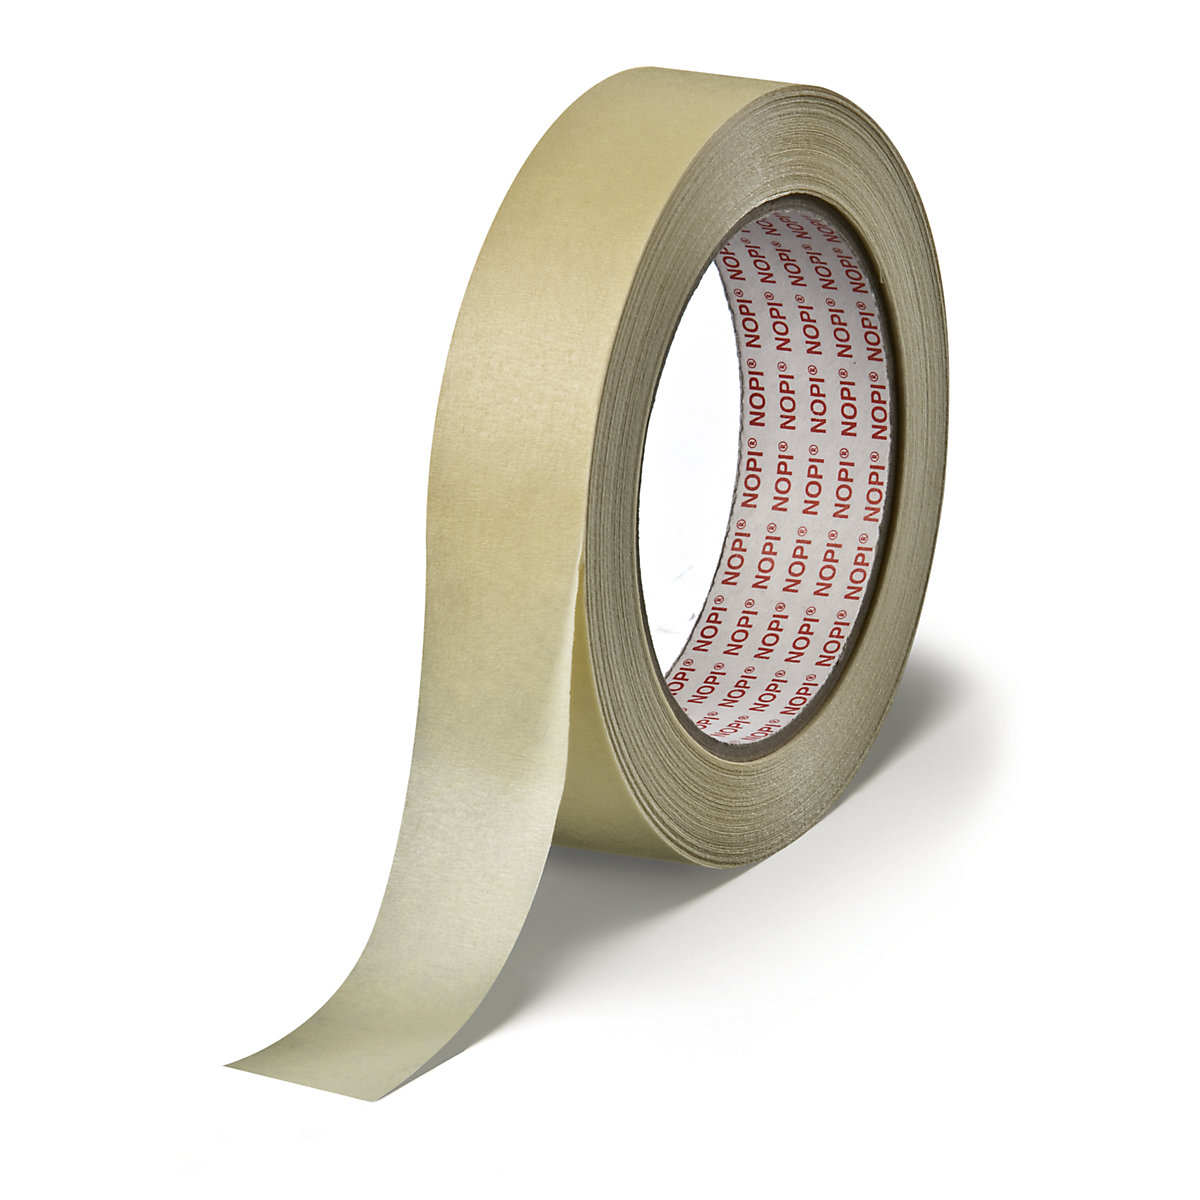 All purpose masking tape, NOPI® 4349, pack of 96 rolls, tape width 19 mm-1